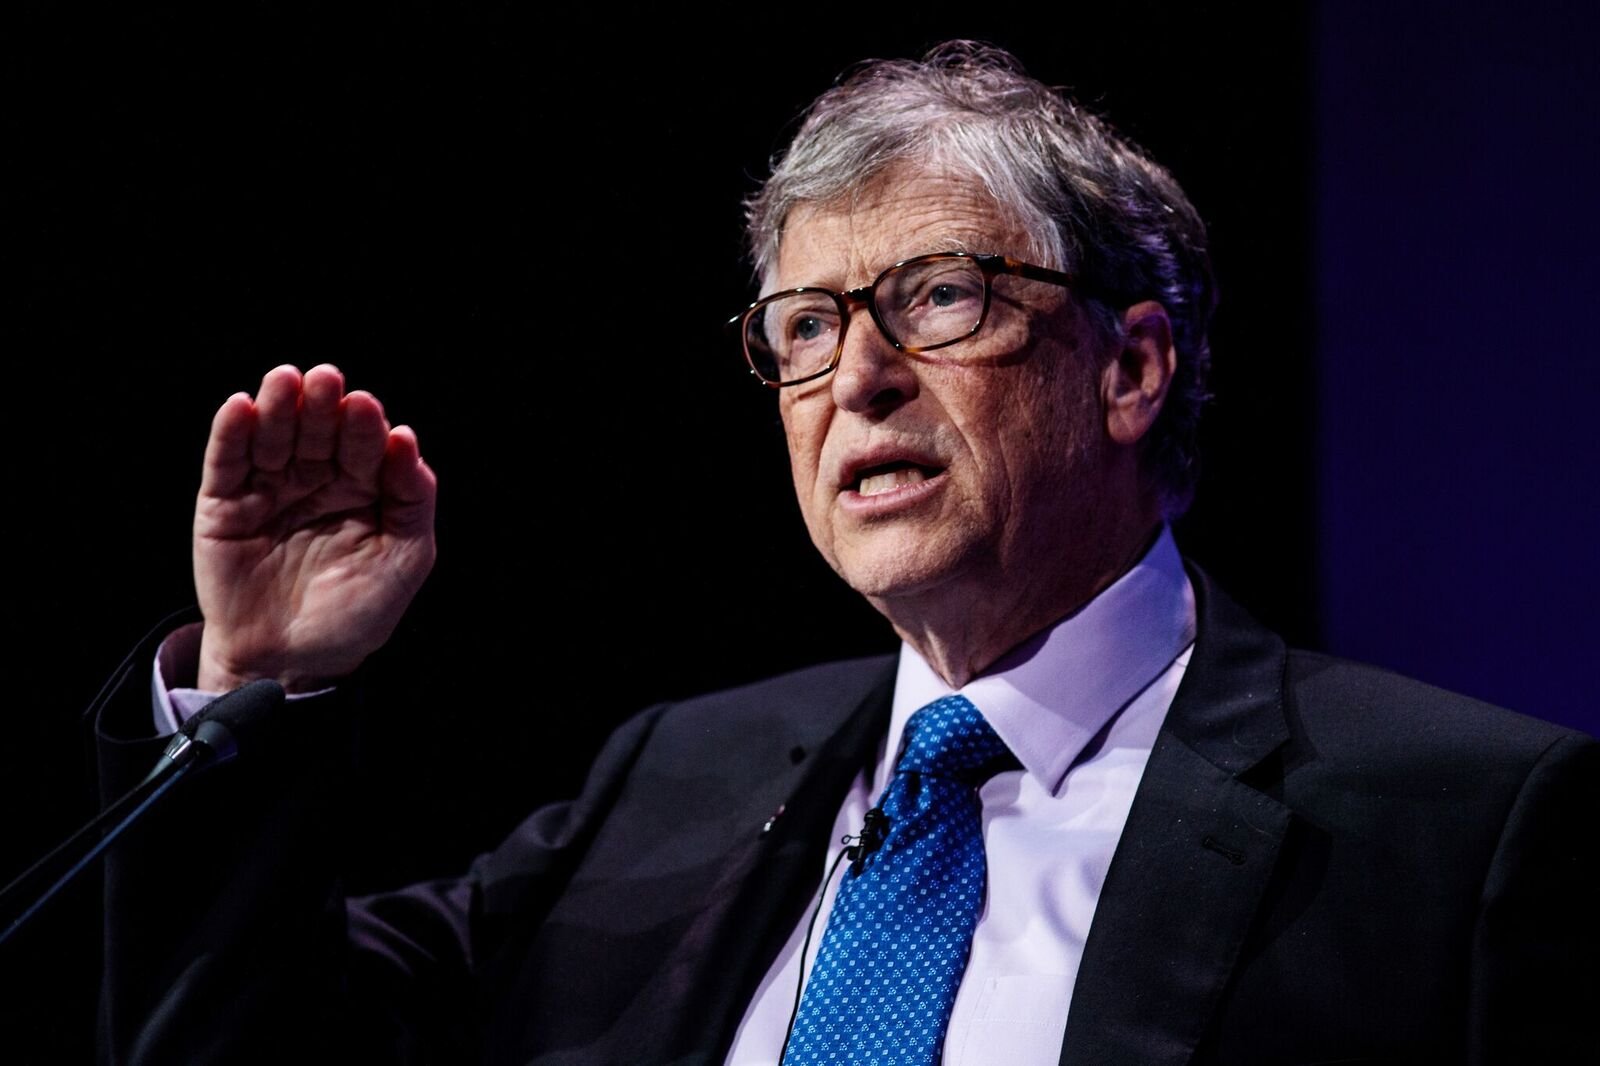 Bill Gates prounica un discurso en la Cumbre de la Malaria en 8 Northumberland Avenue el 18 de abril de 2018 en Londres, Inglaterra | Foto: Getty Images